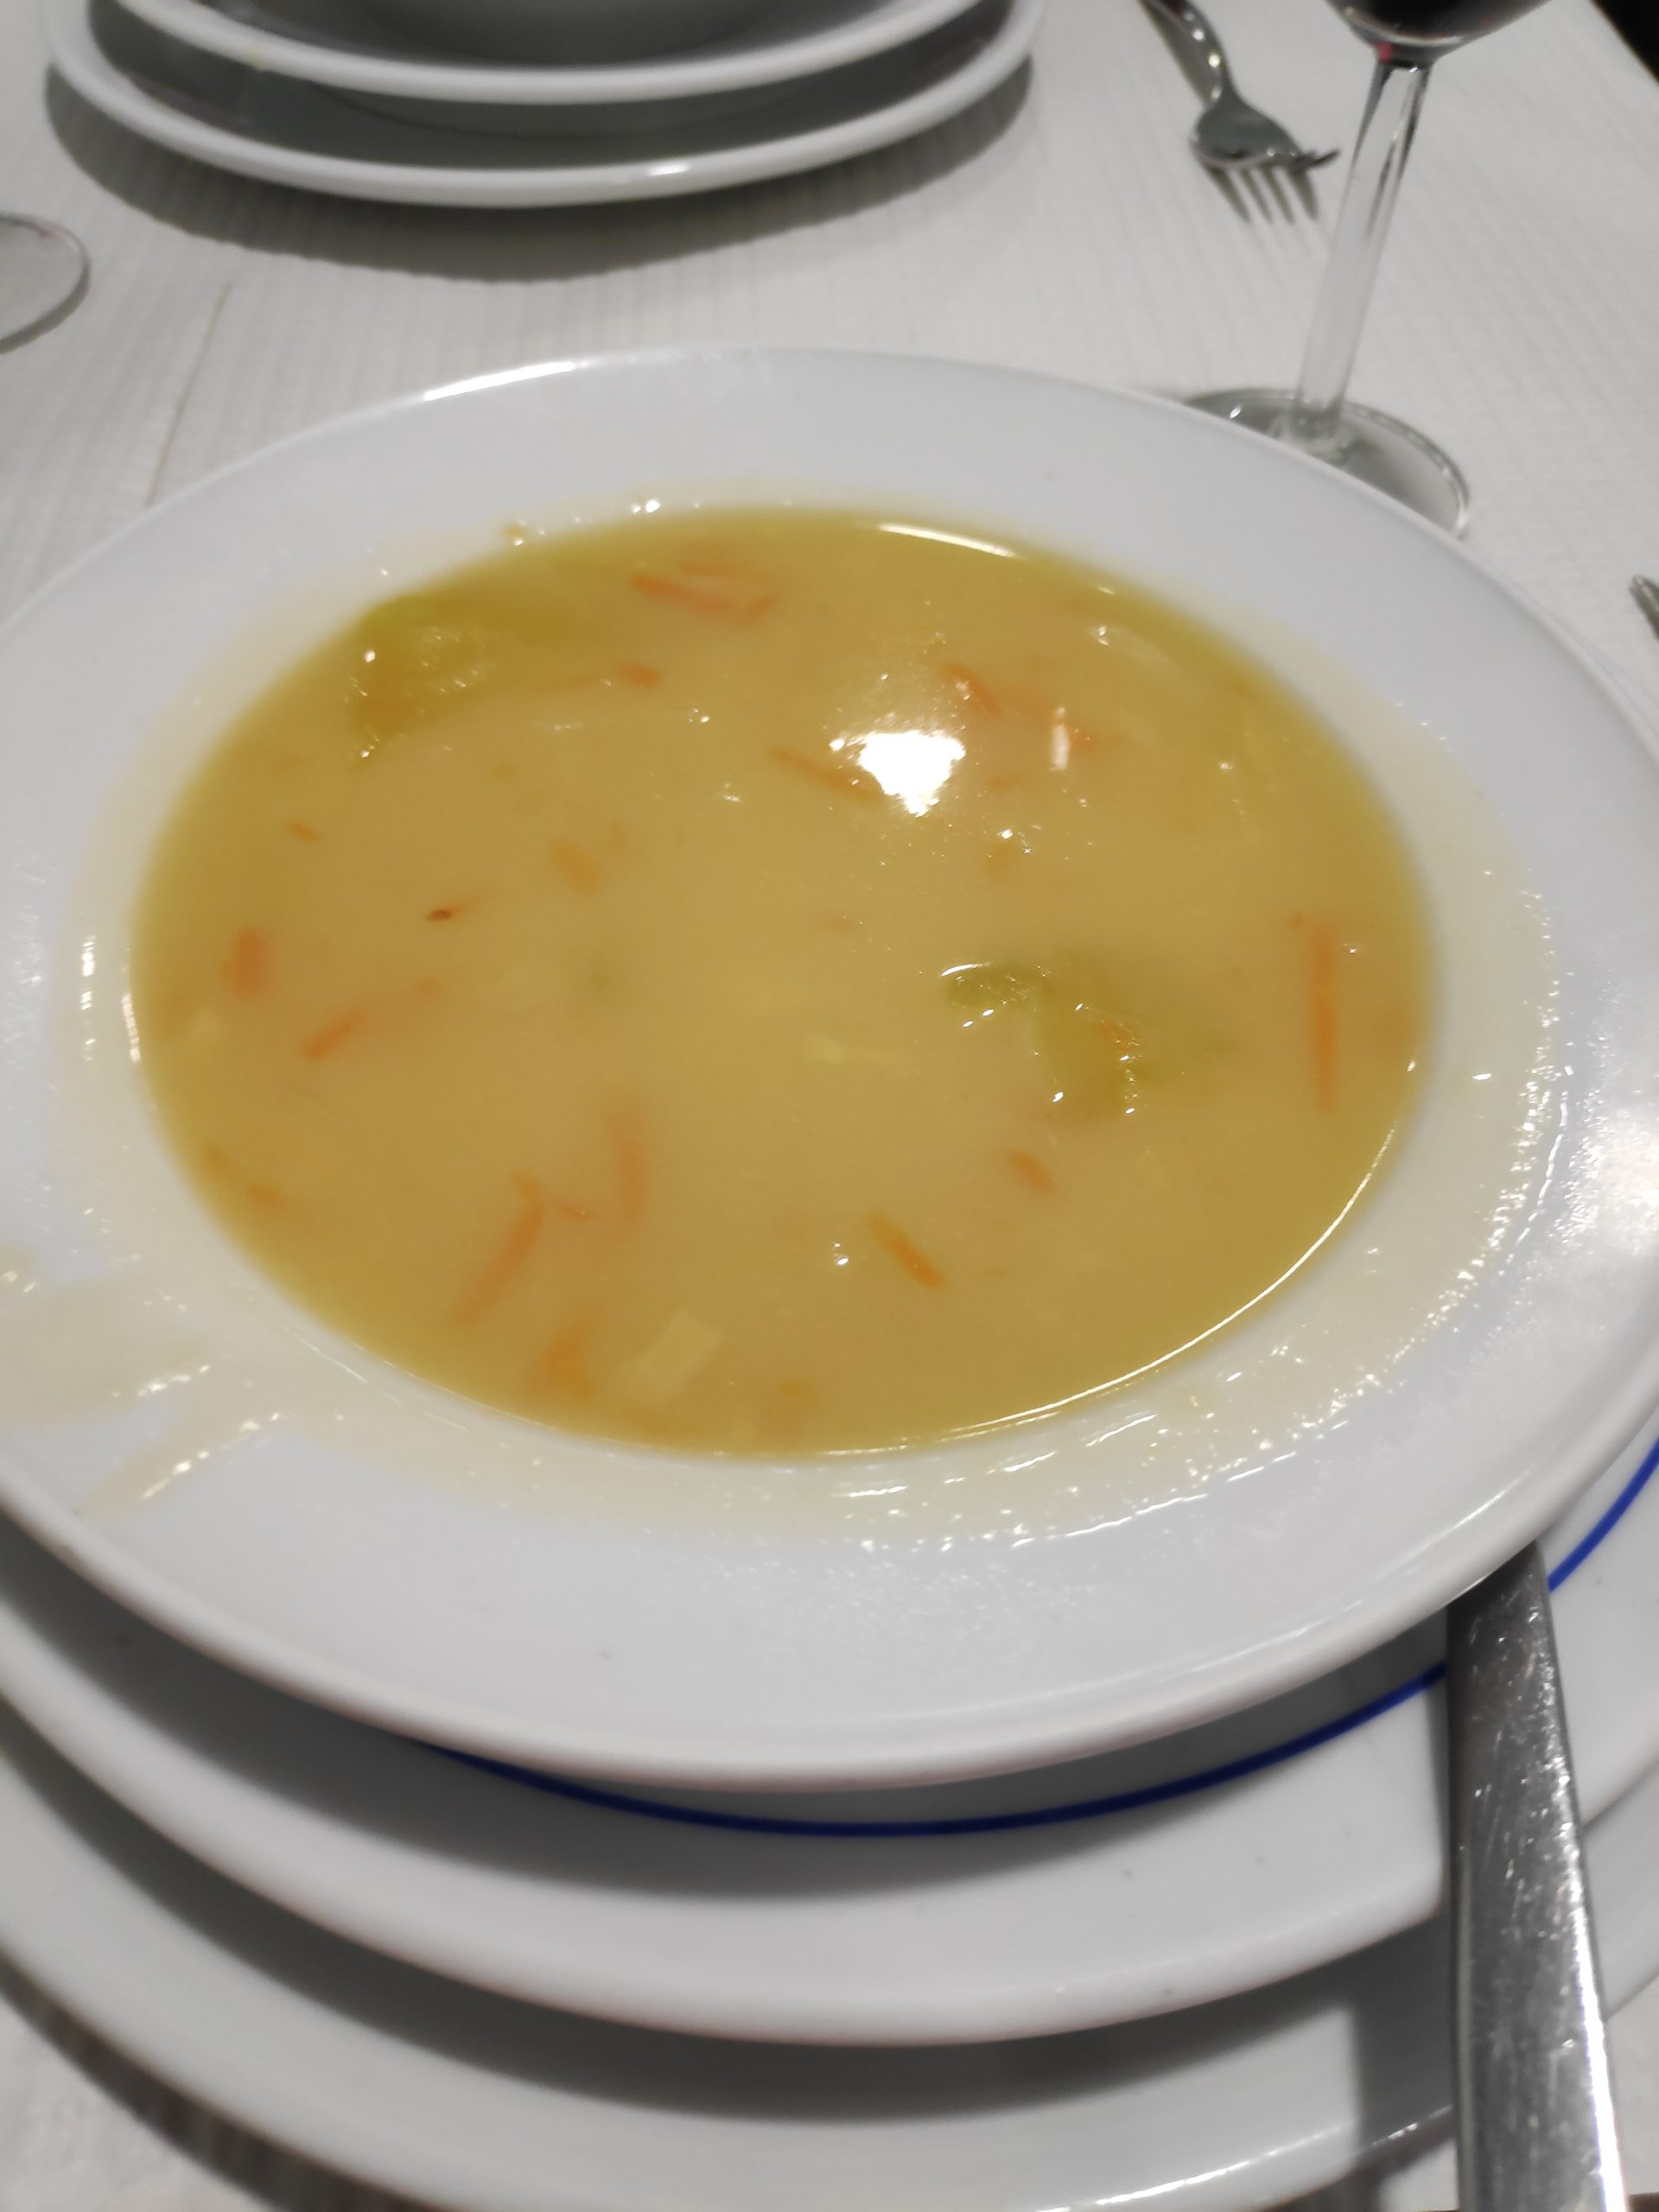 Random soup